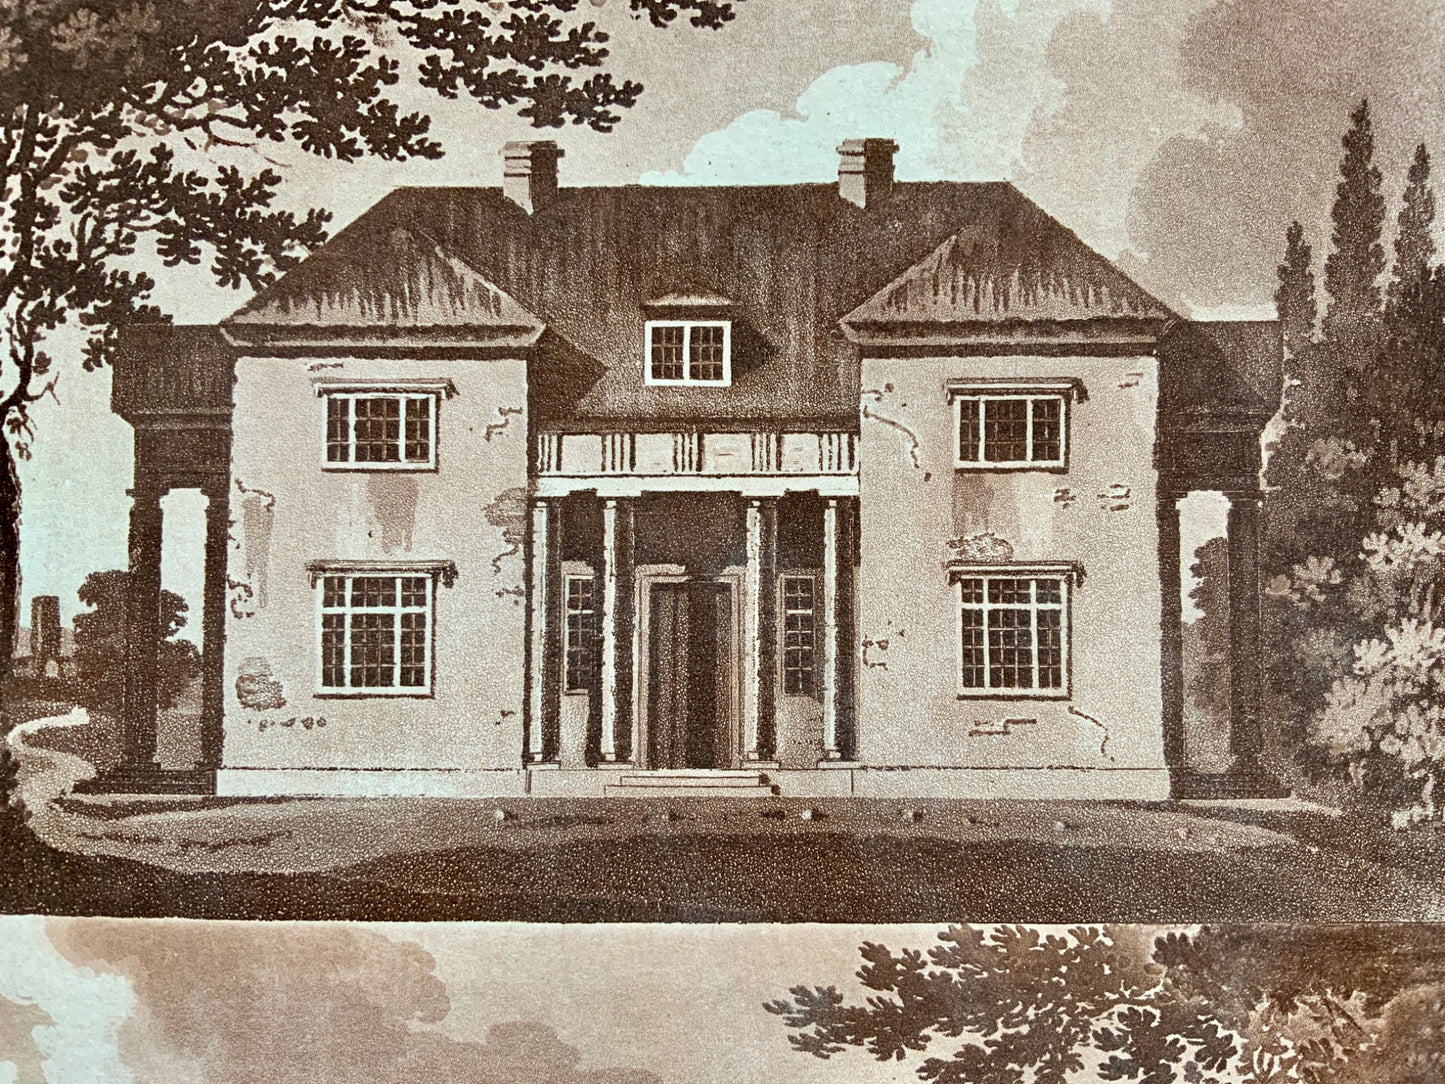 1803 Richard Elsam Folio aquatint Cottage in “Modern Antique” style Architecture